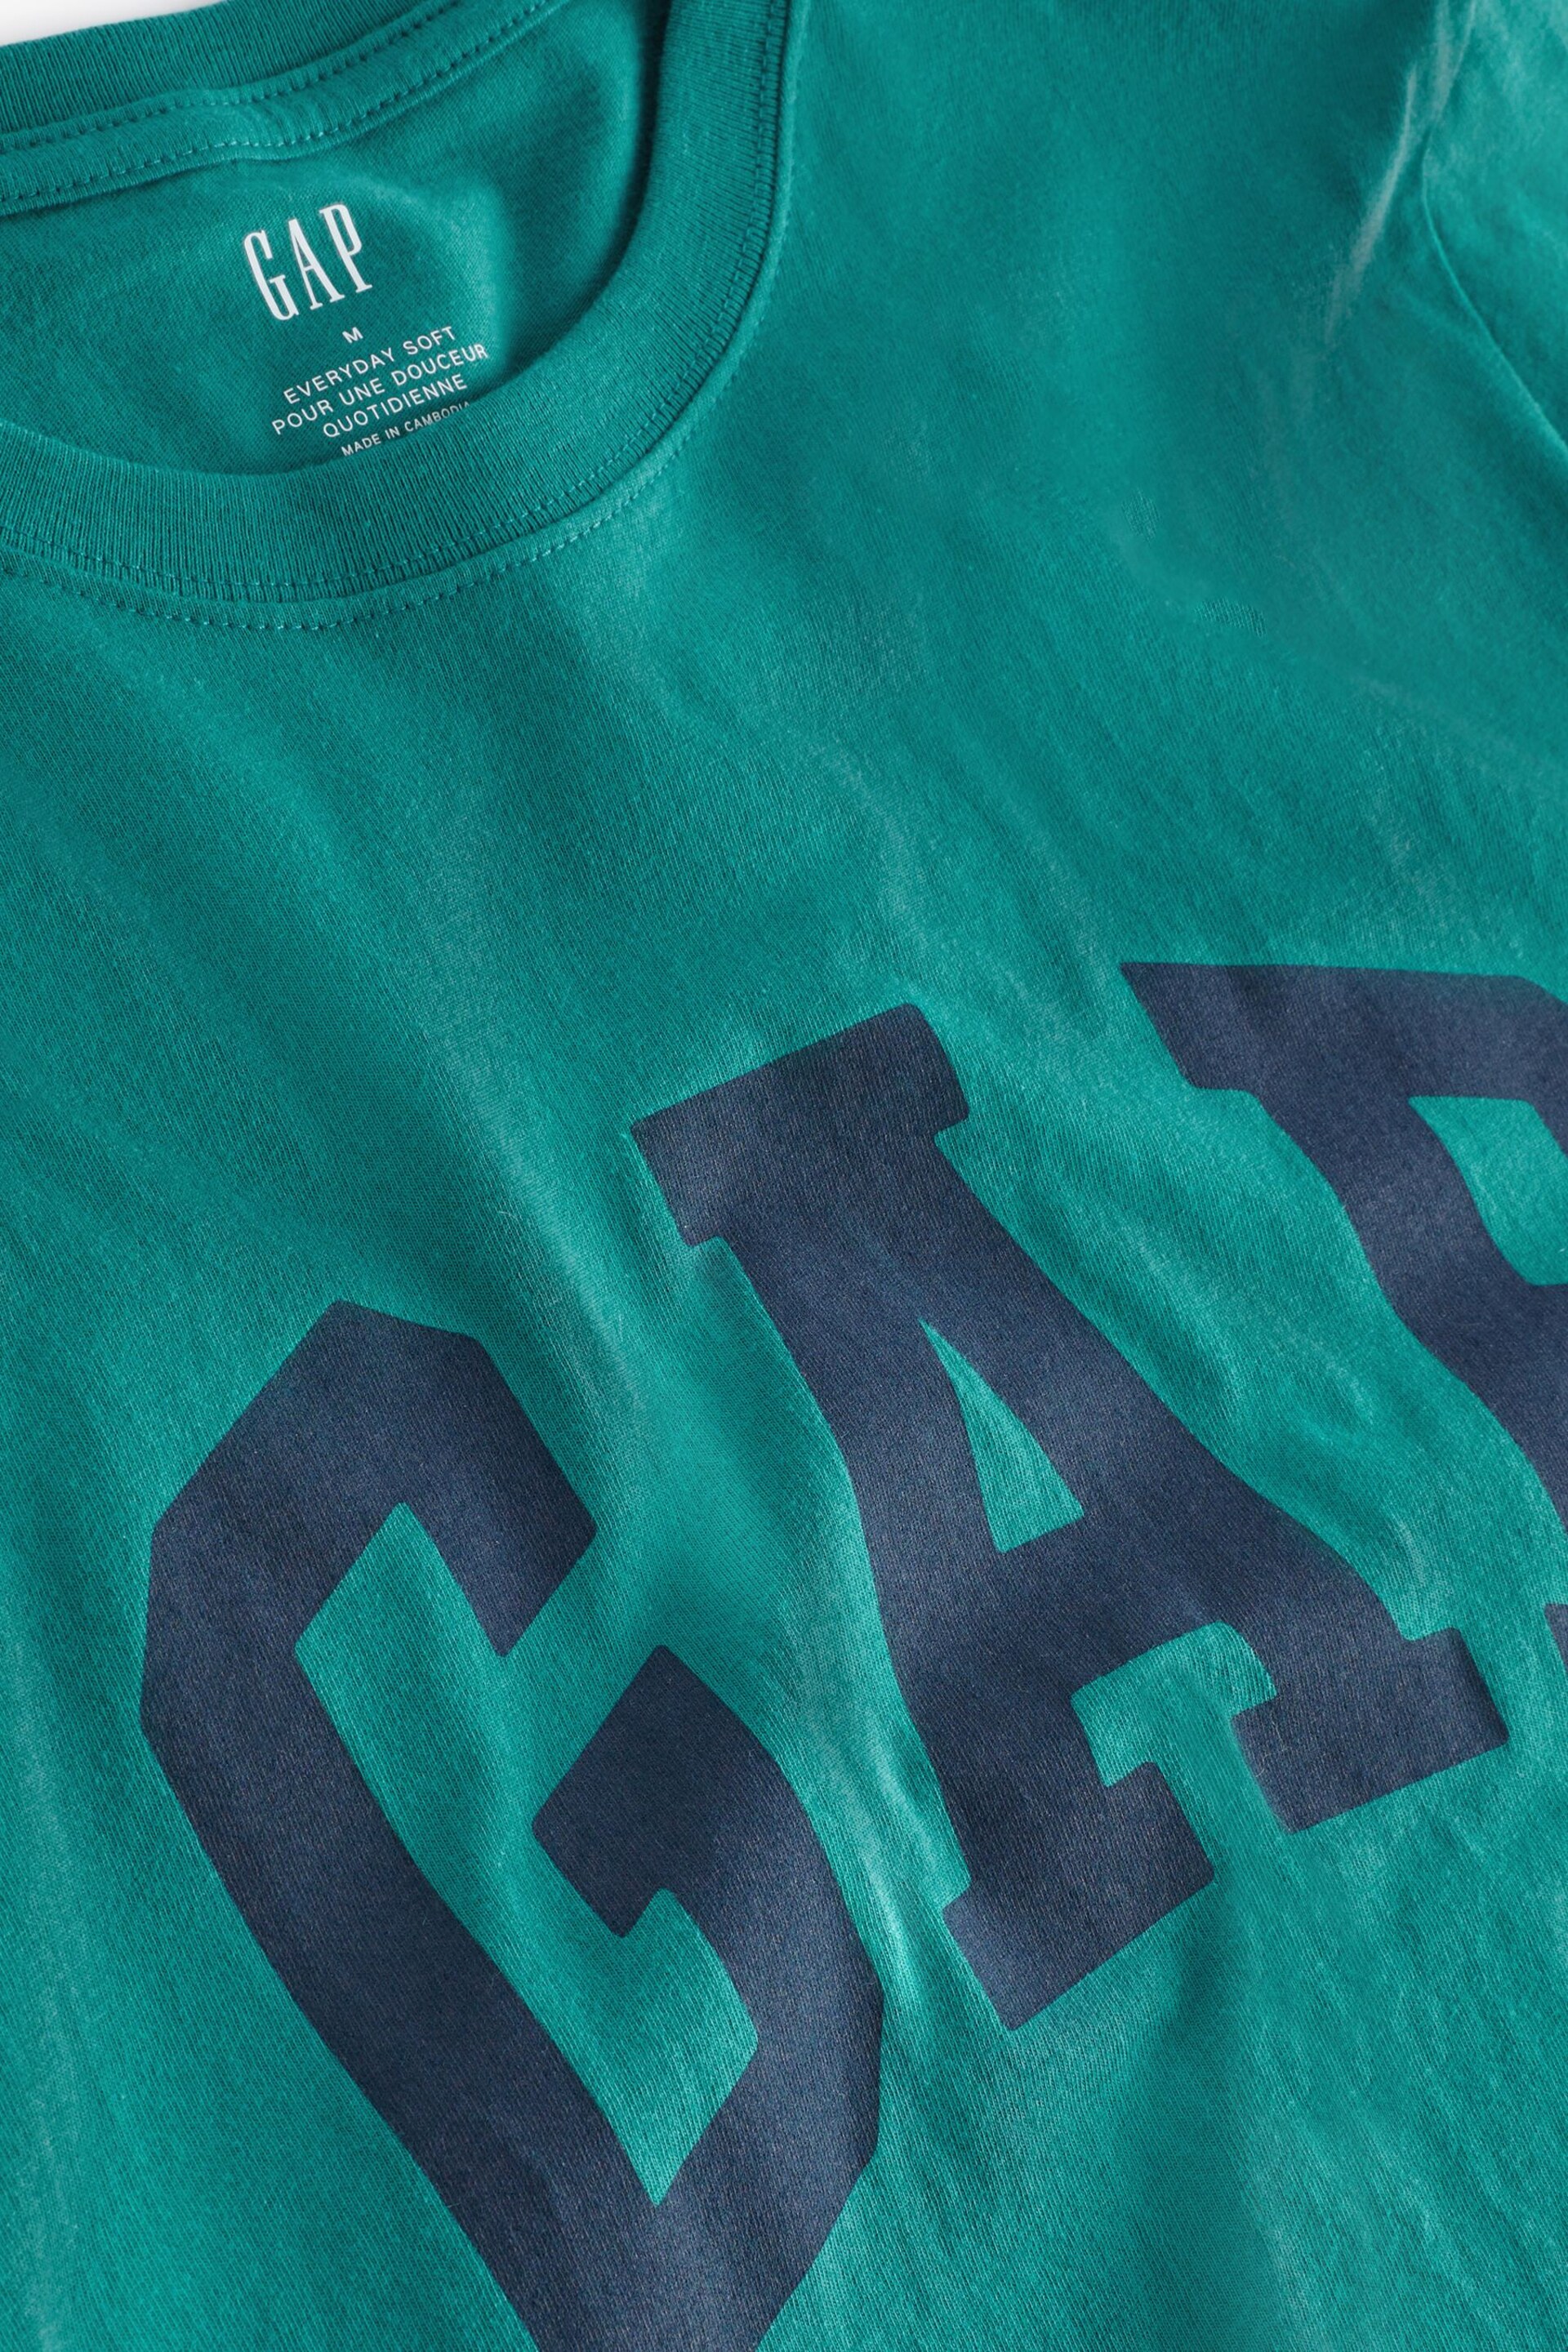 Gap Green Everyday Soft Logo Short Sleeve Crew Neck T-Shirt - Image 4 of 4